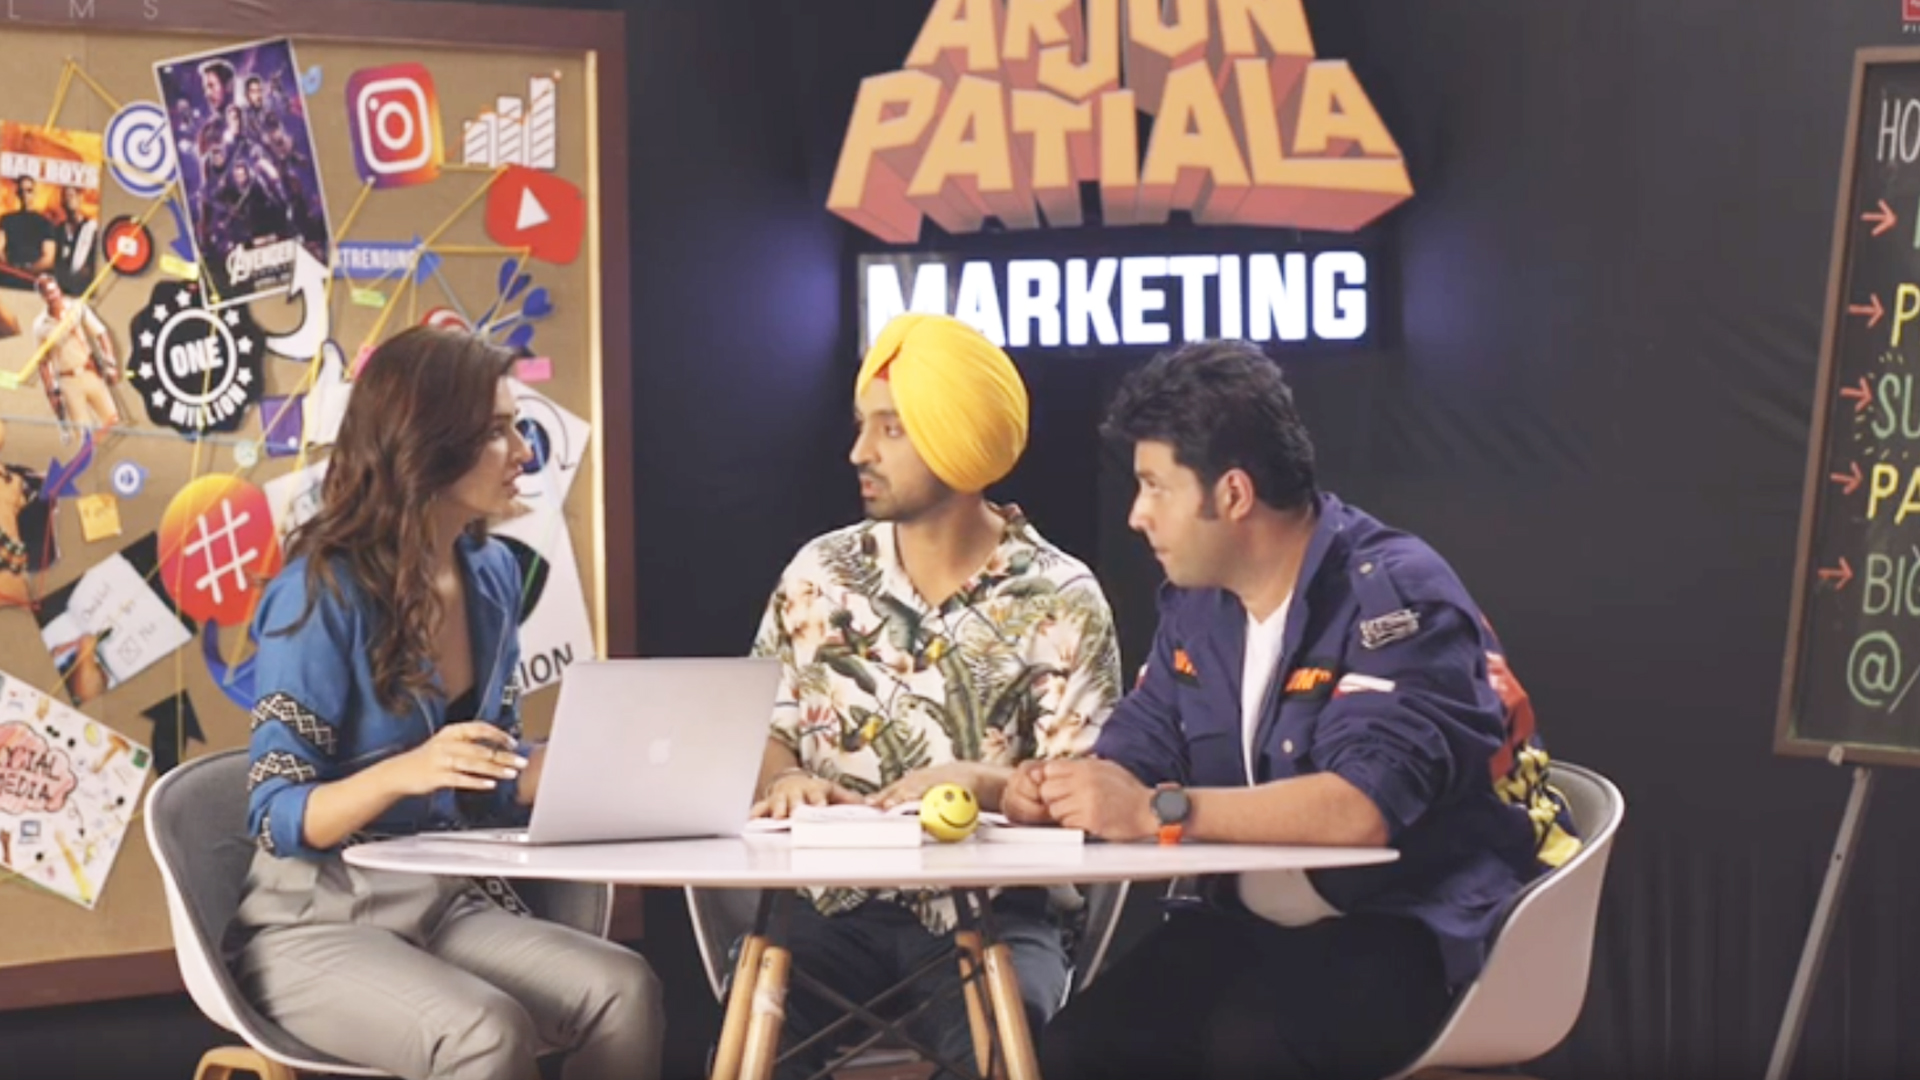 Episode 3: Marketing Lesson – B(ROMANCE) by the team of Arjun Patiala